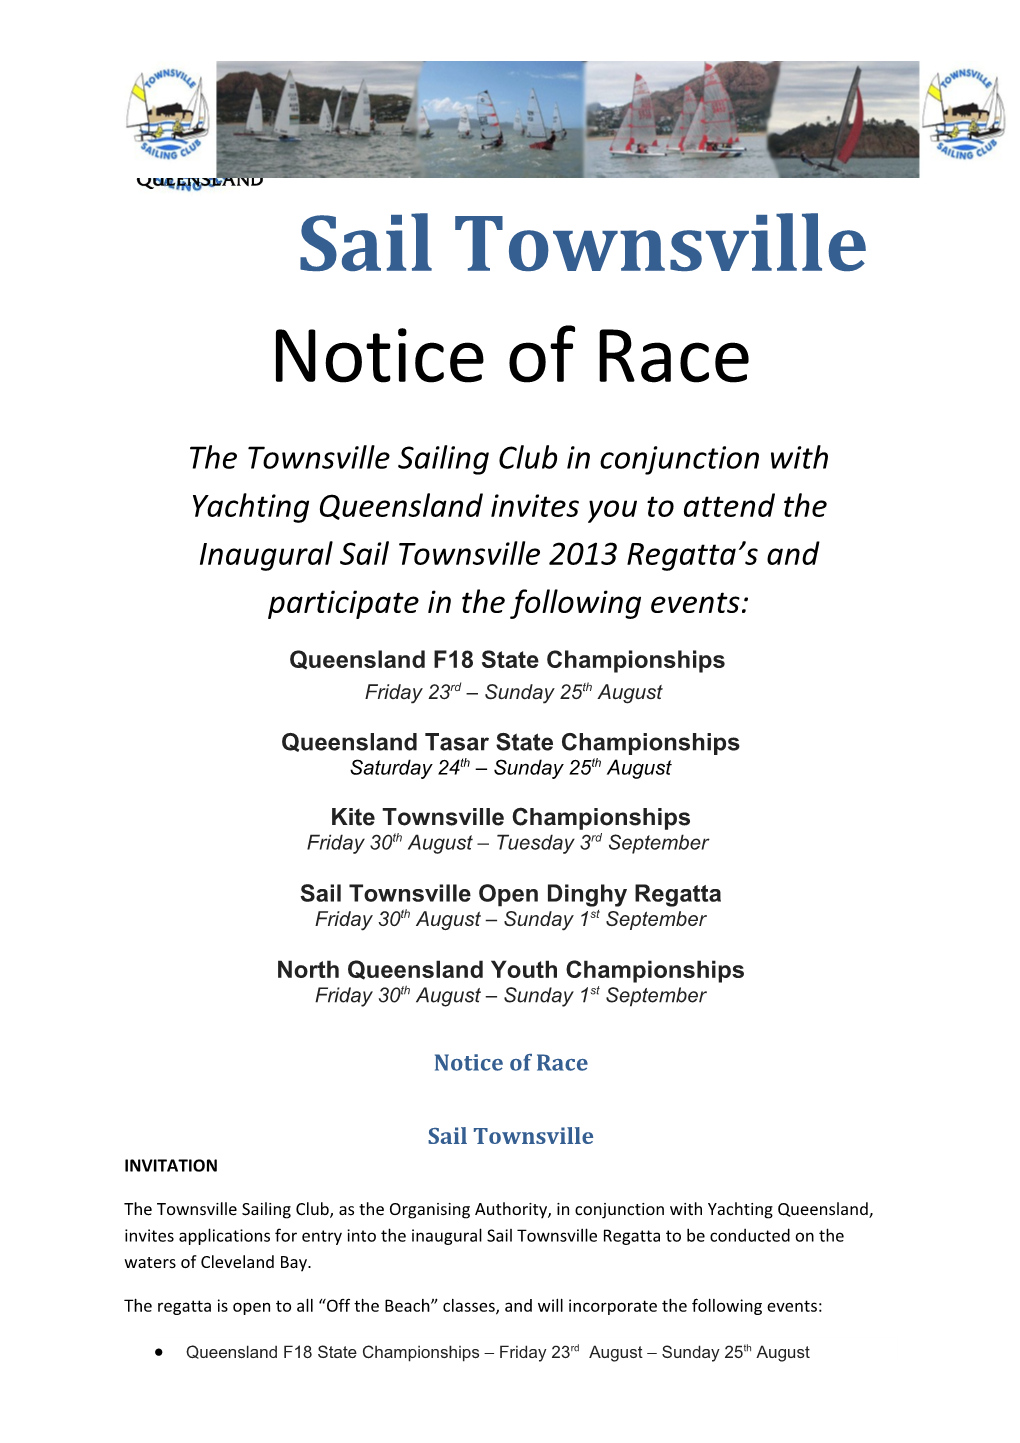 Sail Townsville 2013 Notice of Race